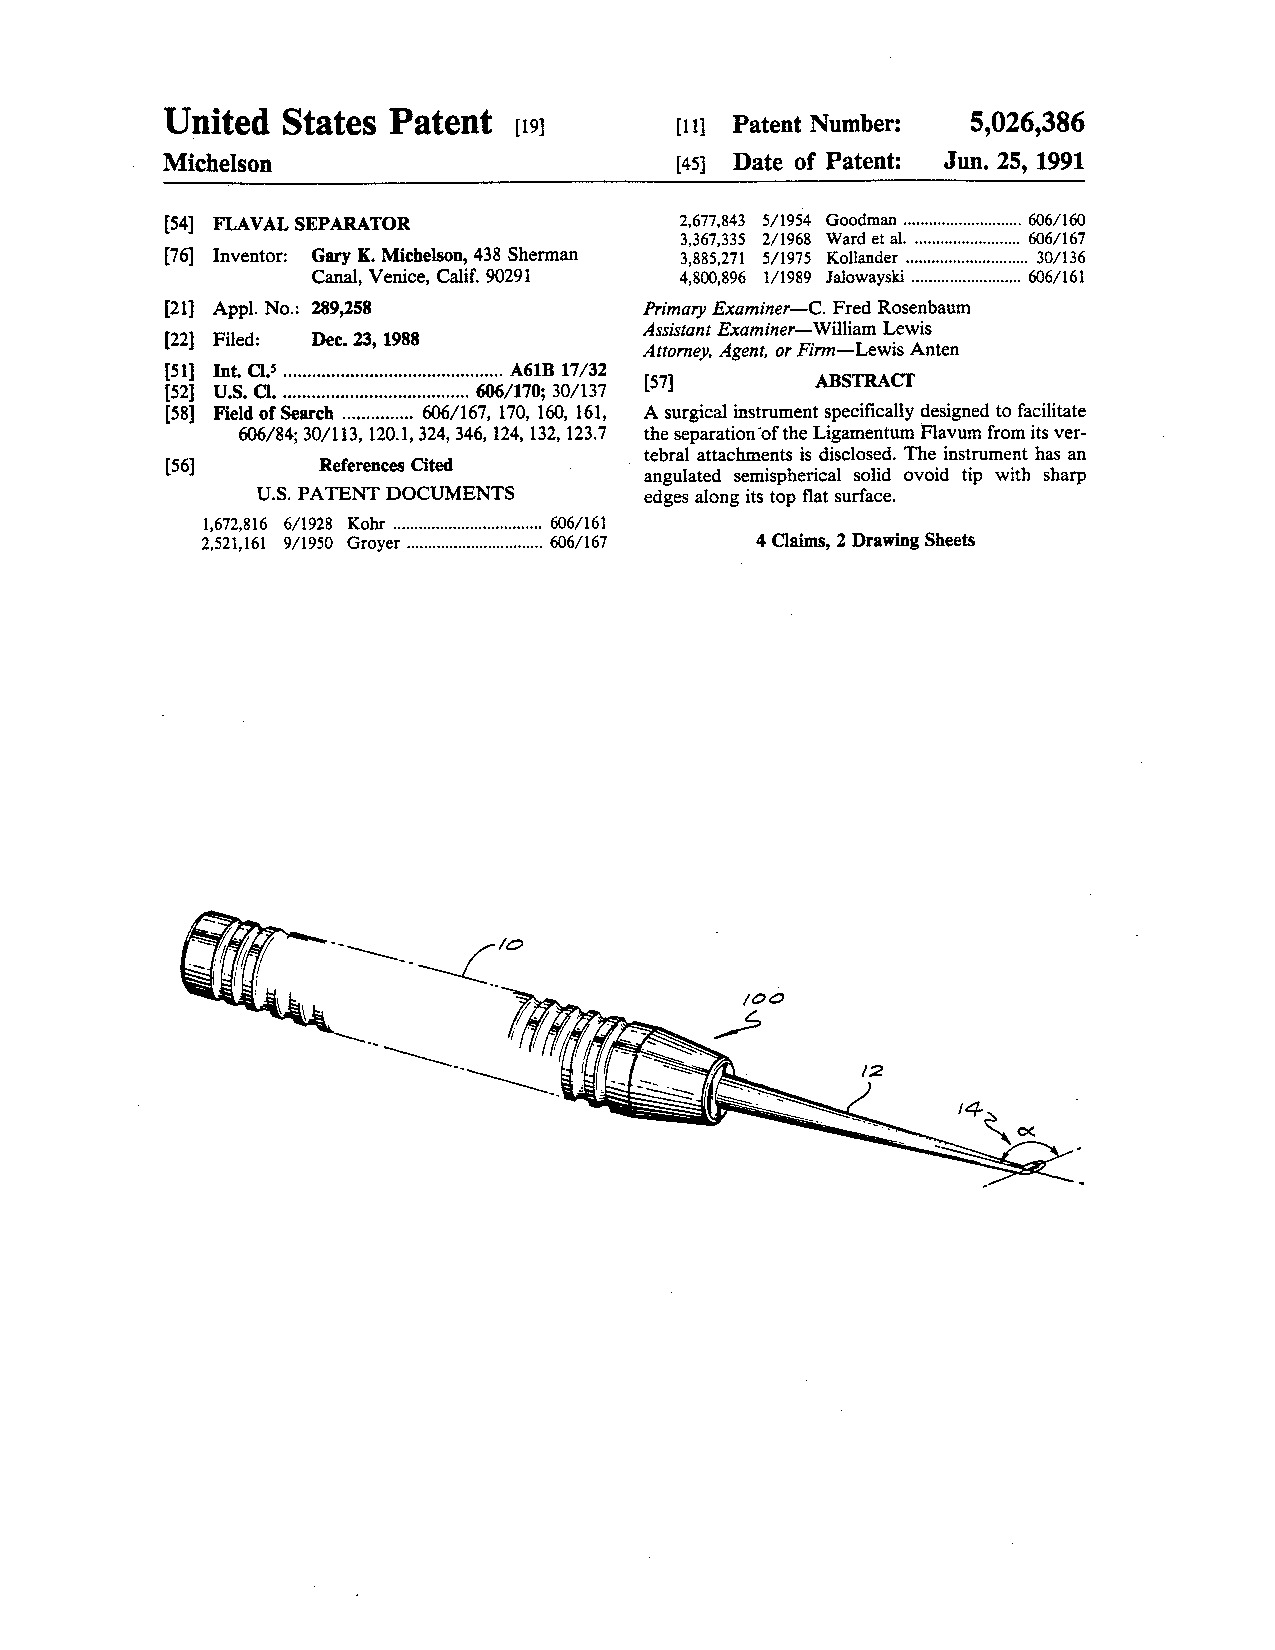 Flaval separator - Patent 5,026,386